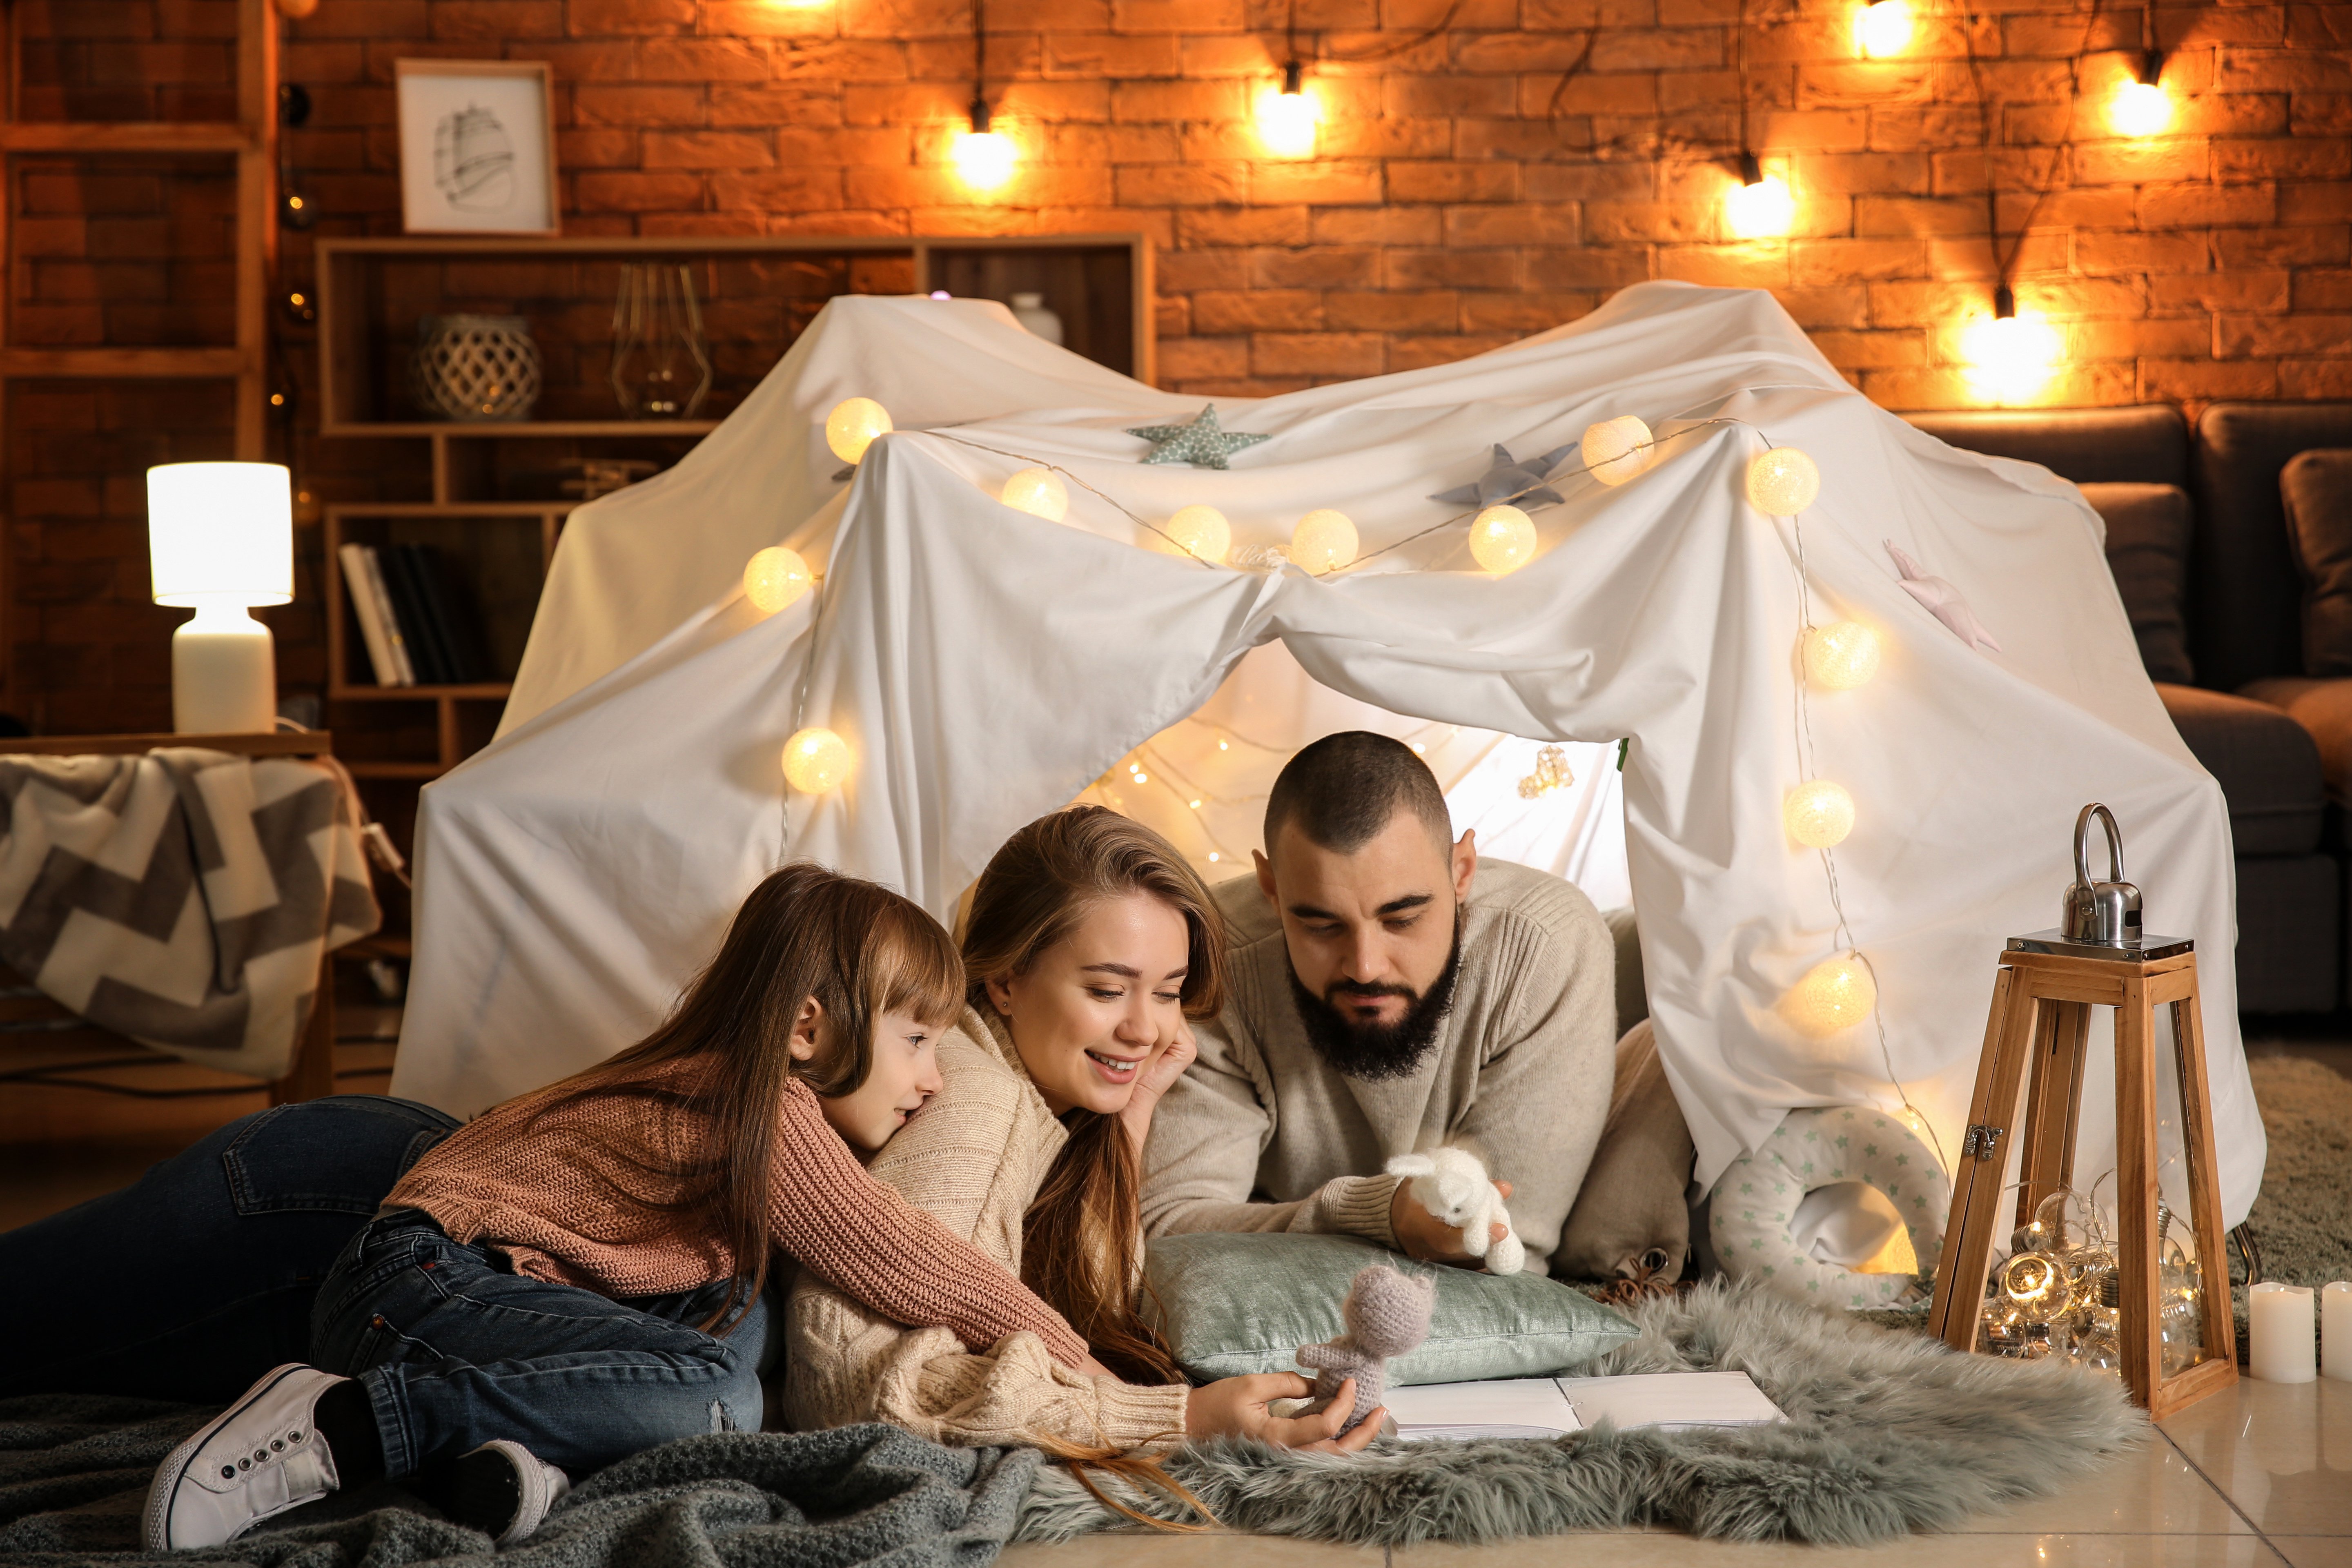 blanket-fort-family-tent-inside-pillows-cozy